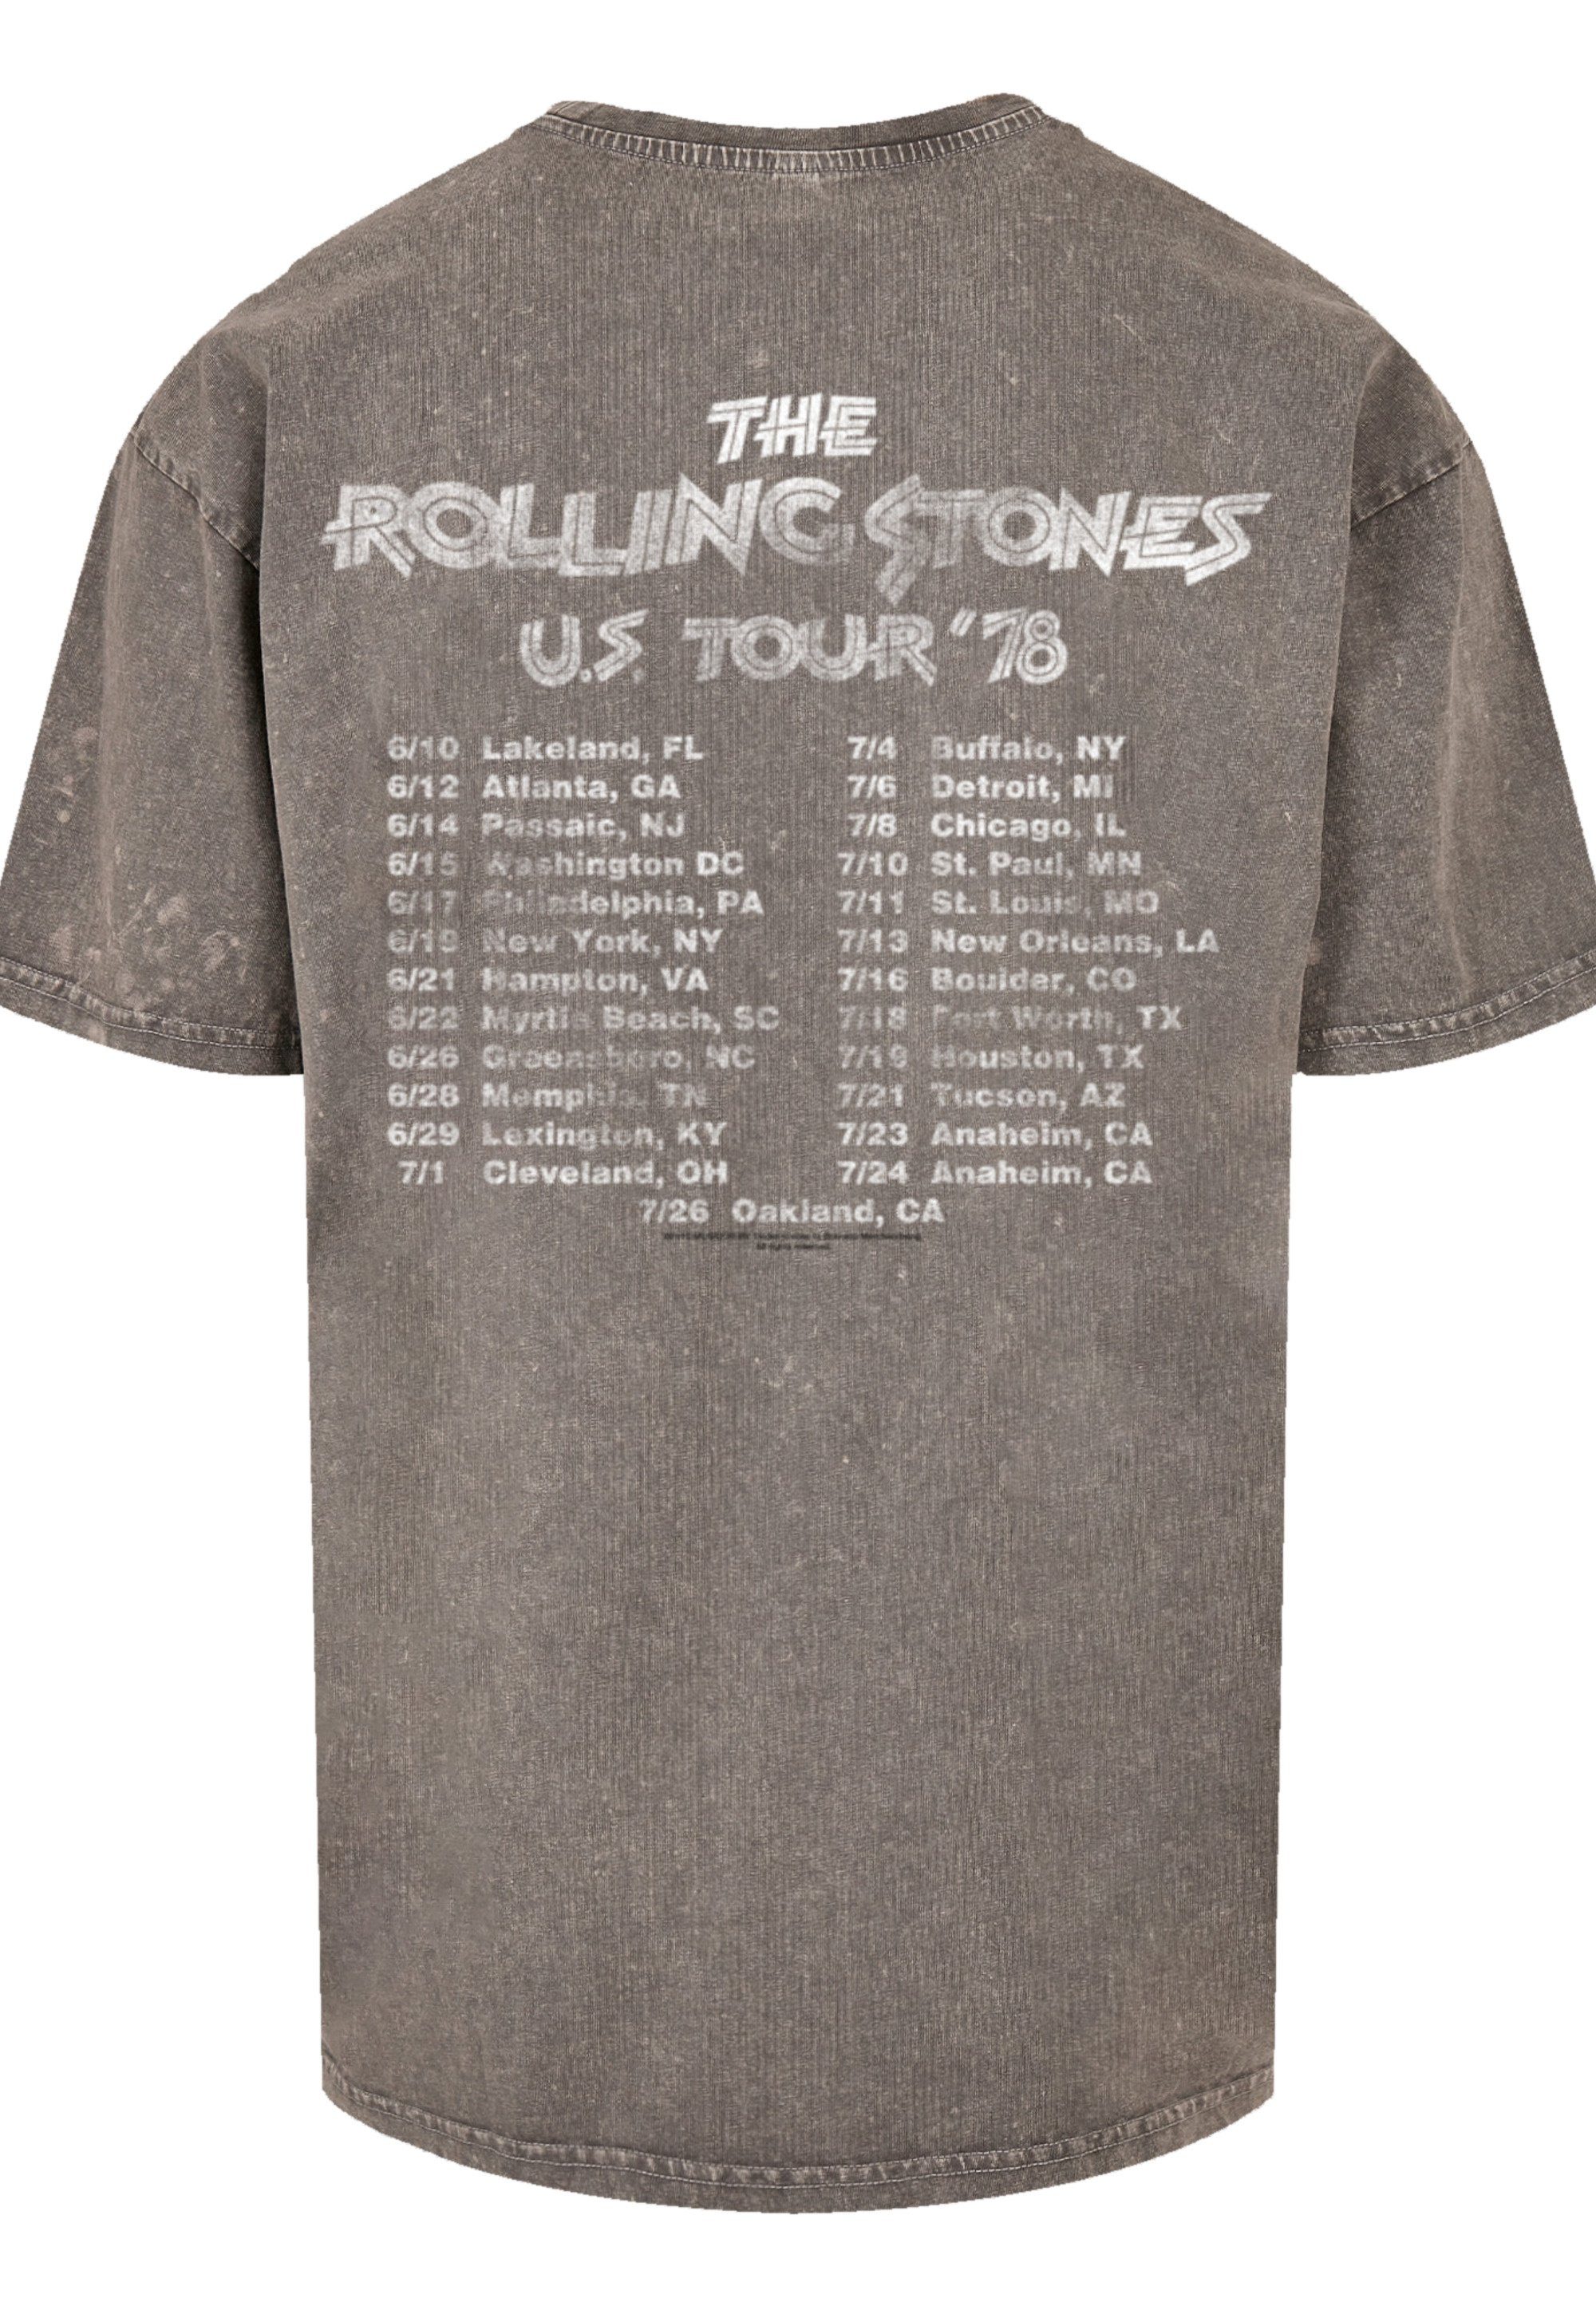 T-Shirt F4NT4STIC Asphalt '78 Print Tour Stones US The Rolling